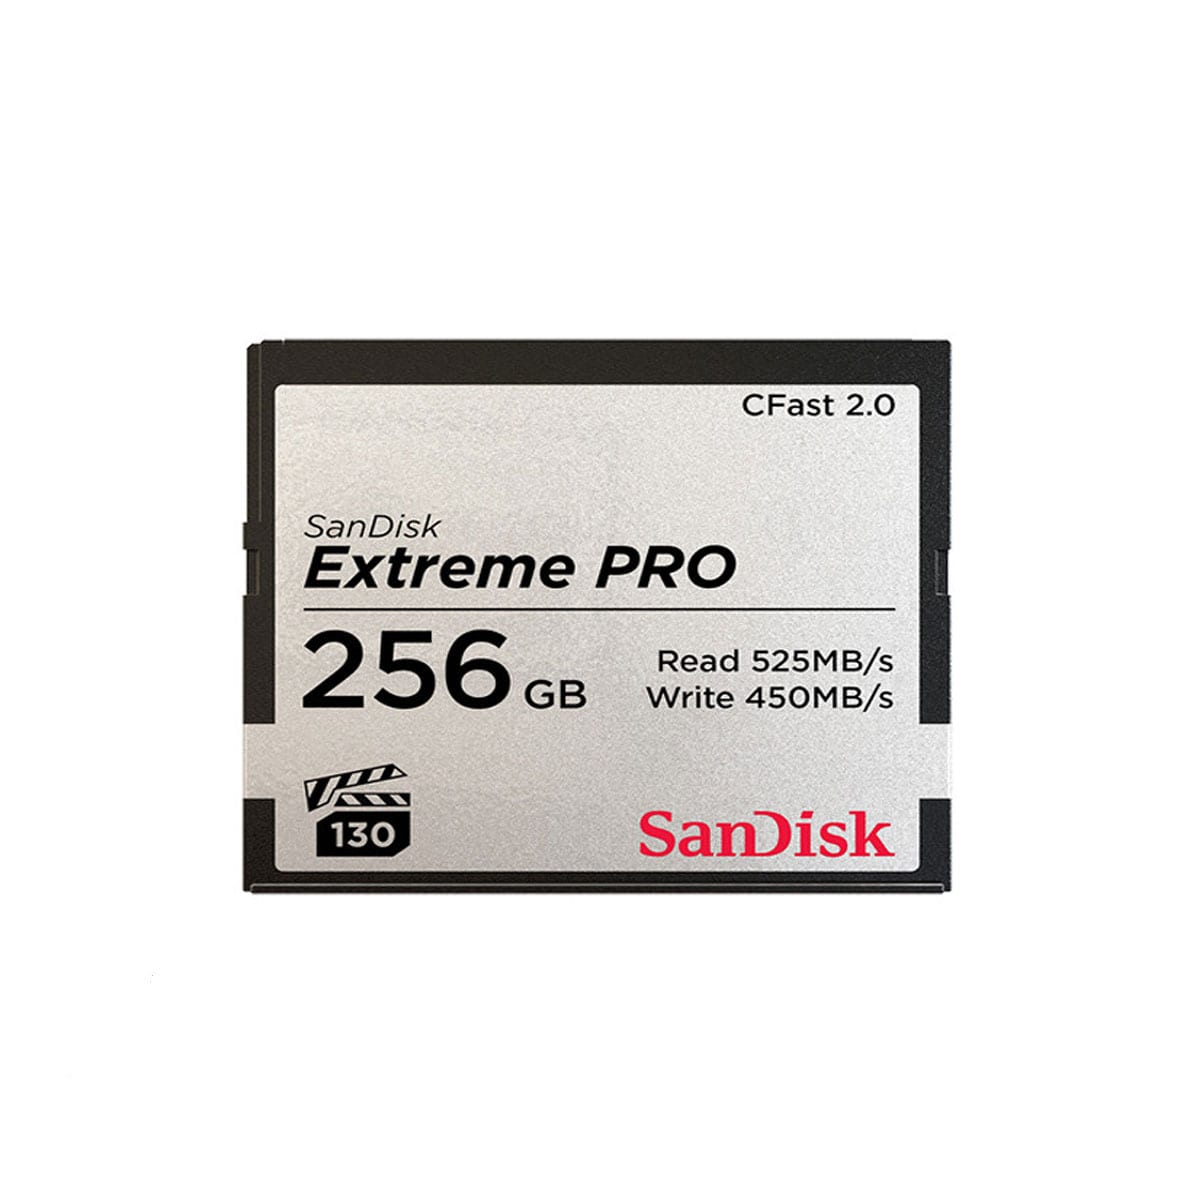 Sandisk CFast Card, 256GB, 525MB/s 